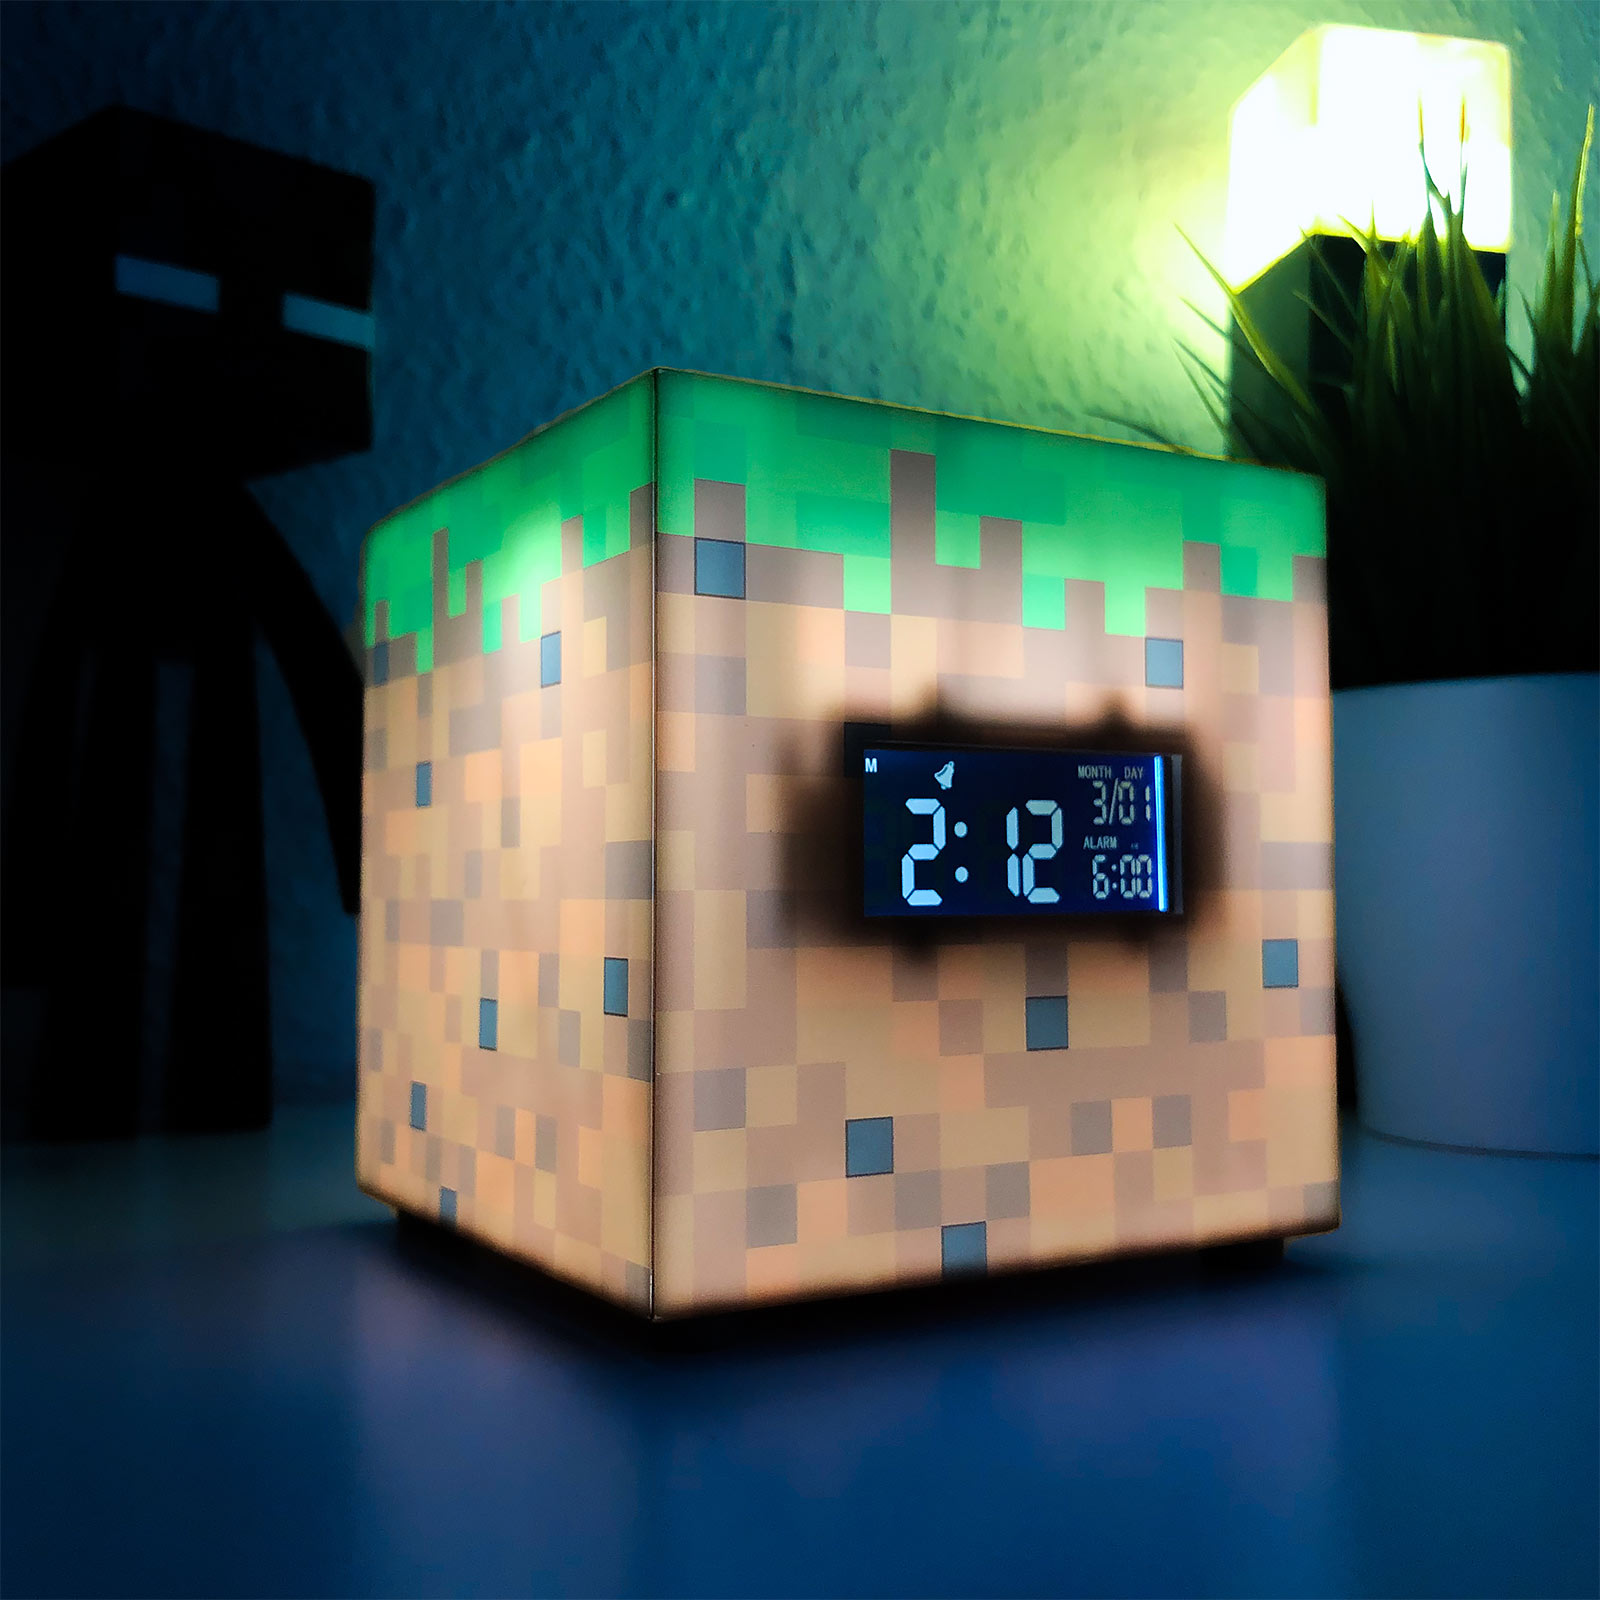 Minecraft - Grass Block Alarm Clock with Light